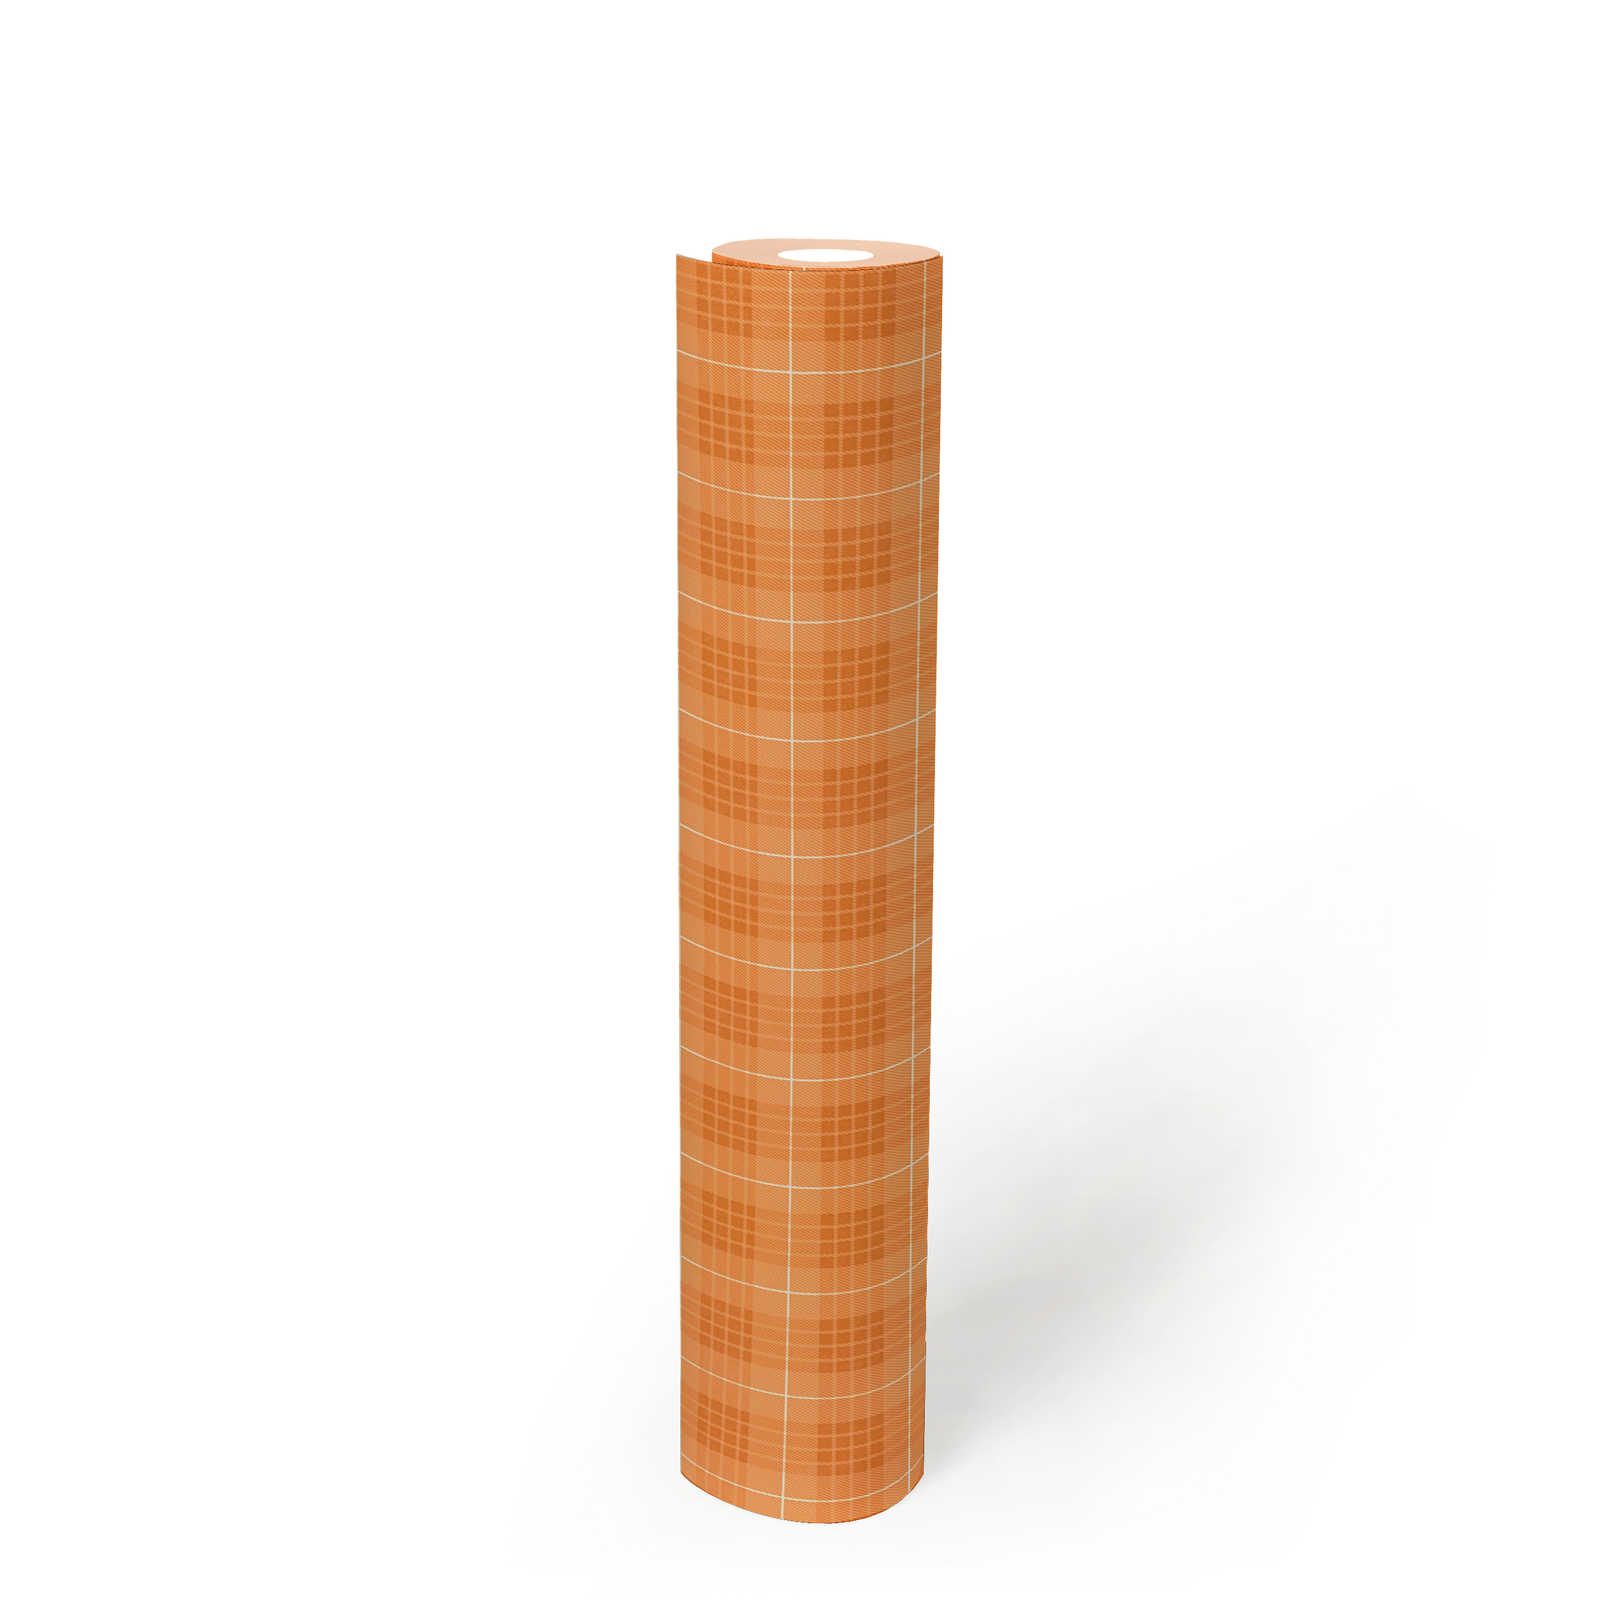             Textile-look wallpaper plaid flannel look - orange, white
        